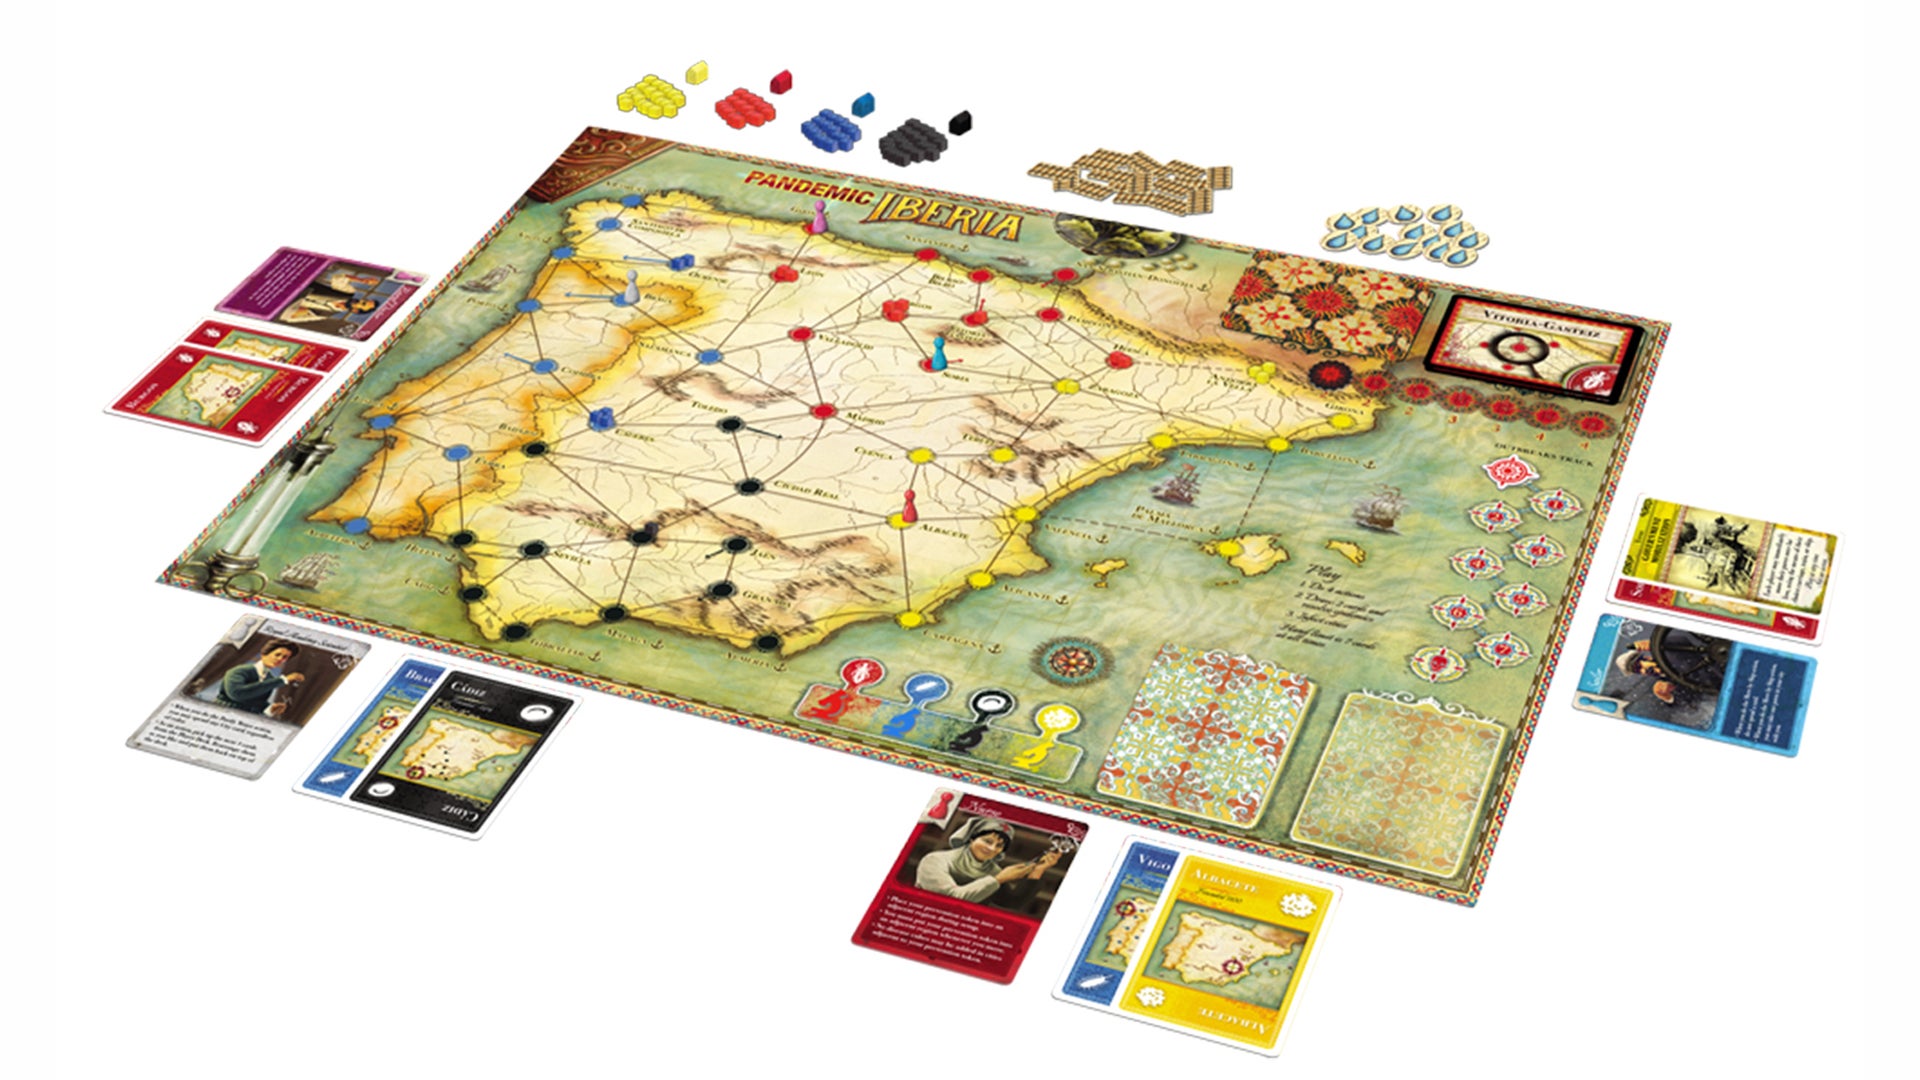 Pandemic Iberia board game layout